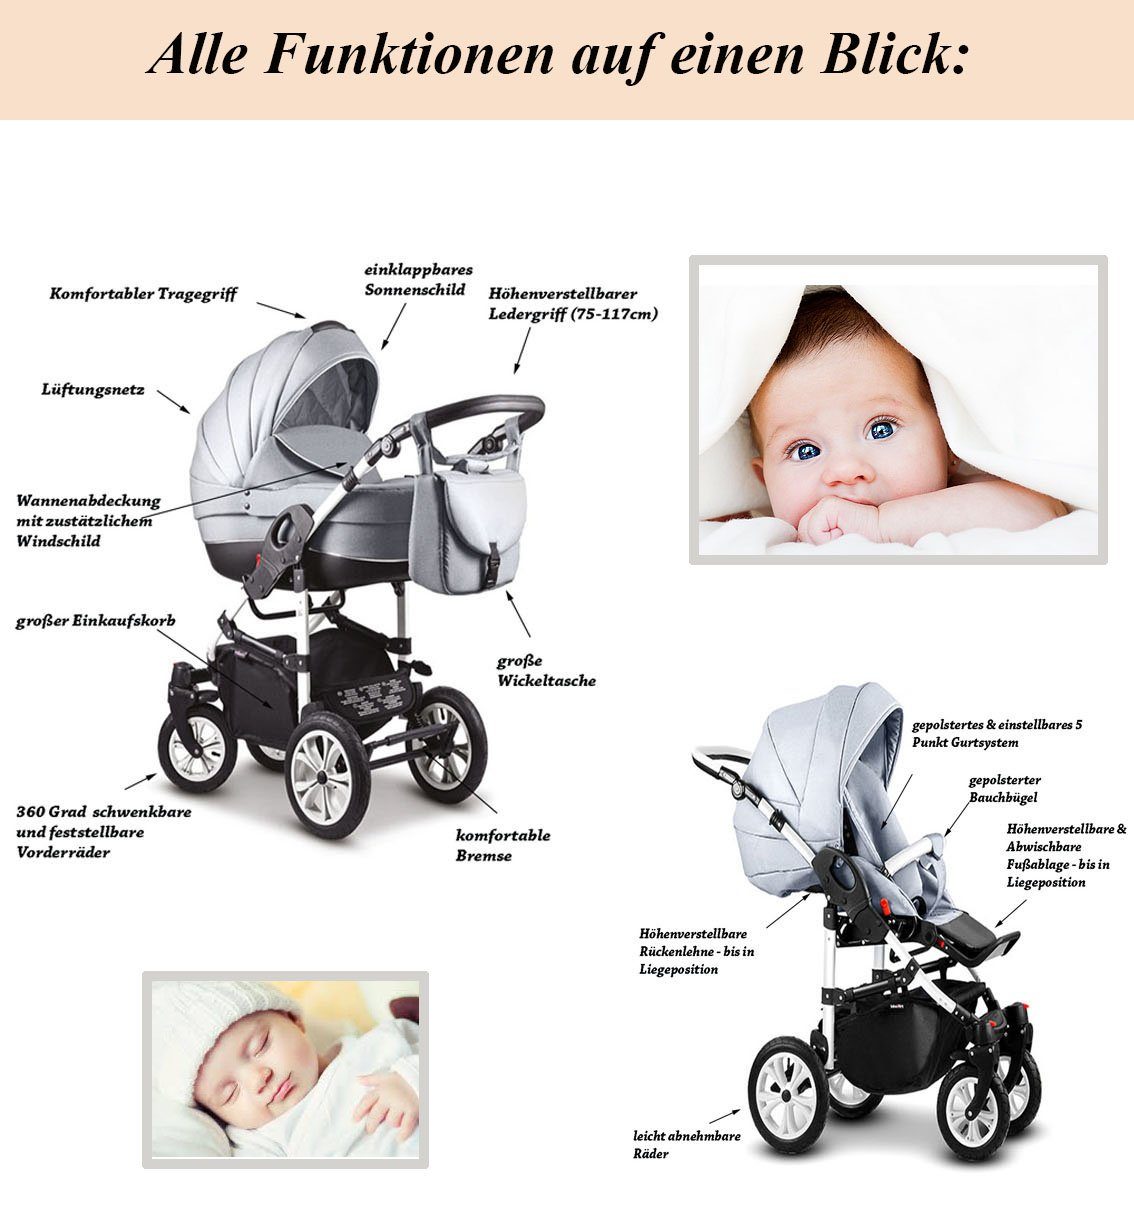 13 - Cosmo in Kinderwagen-Set Teile babies-on-wheels 1 16 in Rosa-Weiß Farben - 2 Kombi-Kinderwagen